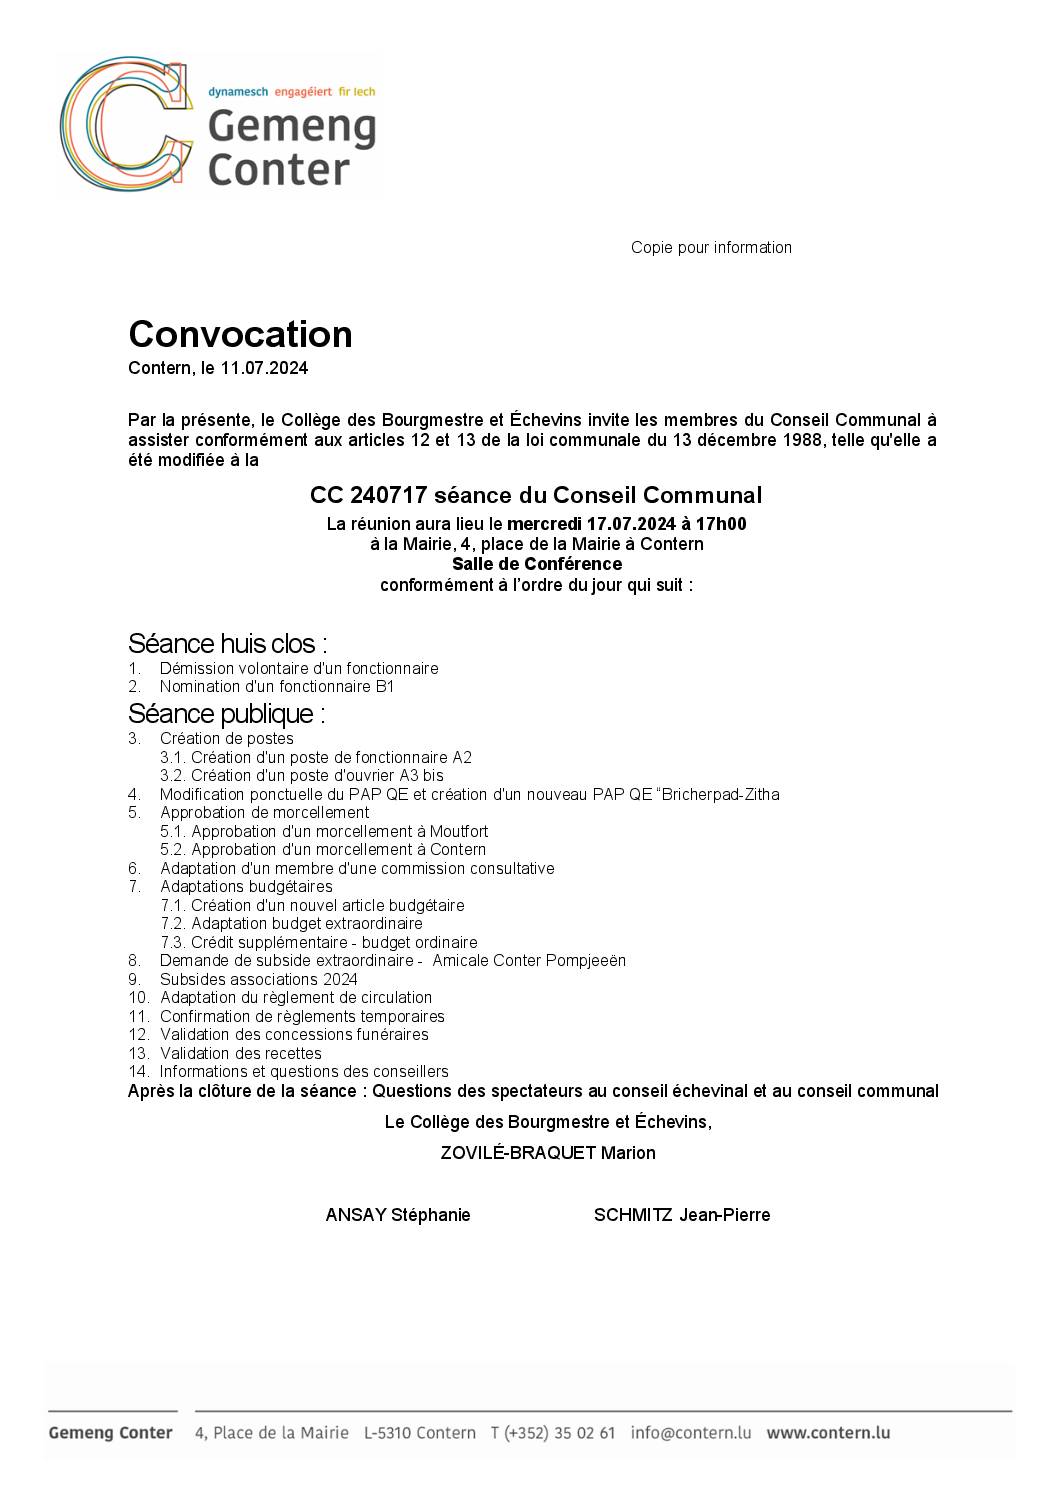 Convocation - Séance du Conseil Communal CC 240717 - 17072024 1700